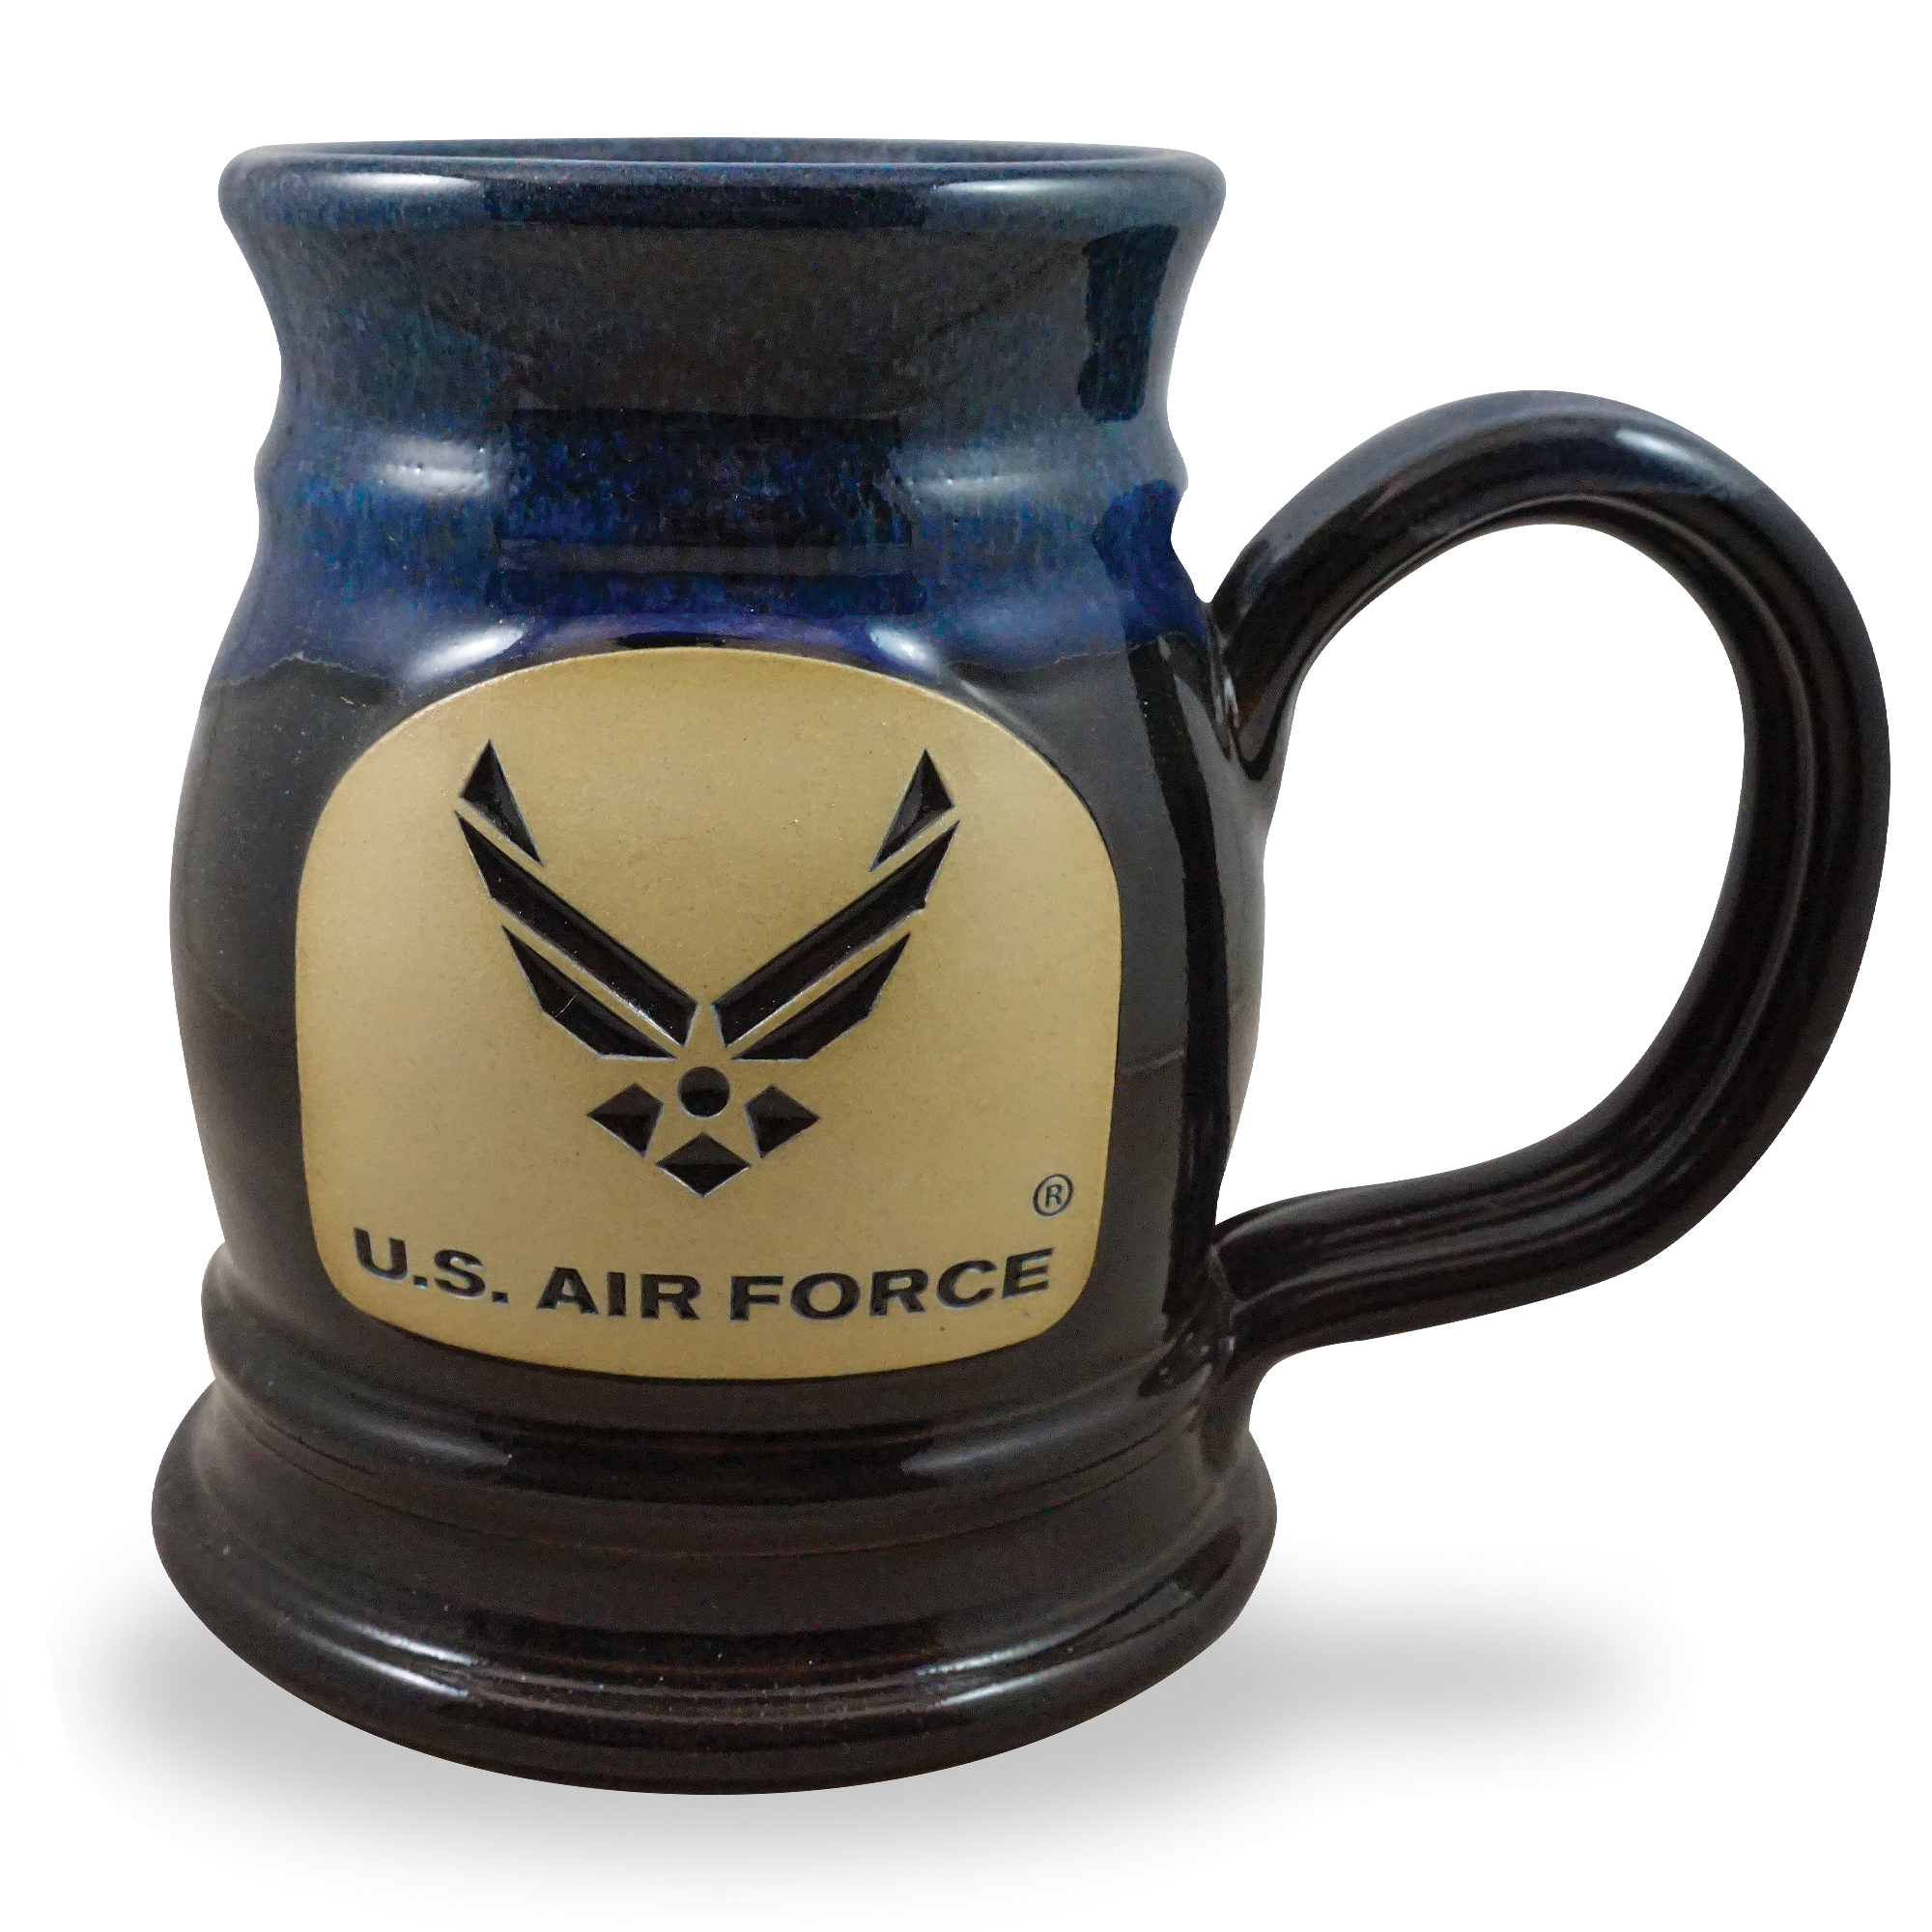 U.S. Air Force <a class='qbutton' href='https://deneenpottery.com/mug-styles/round-tankard/'>View More Details</a>